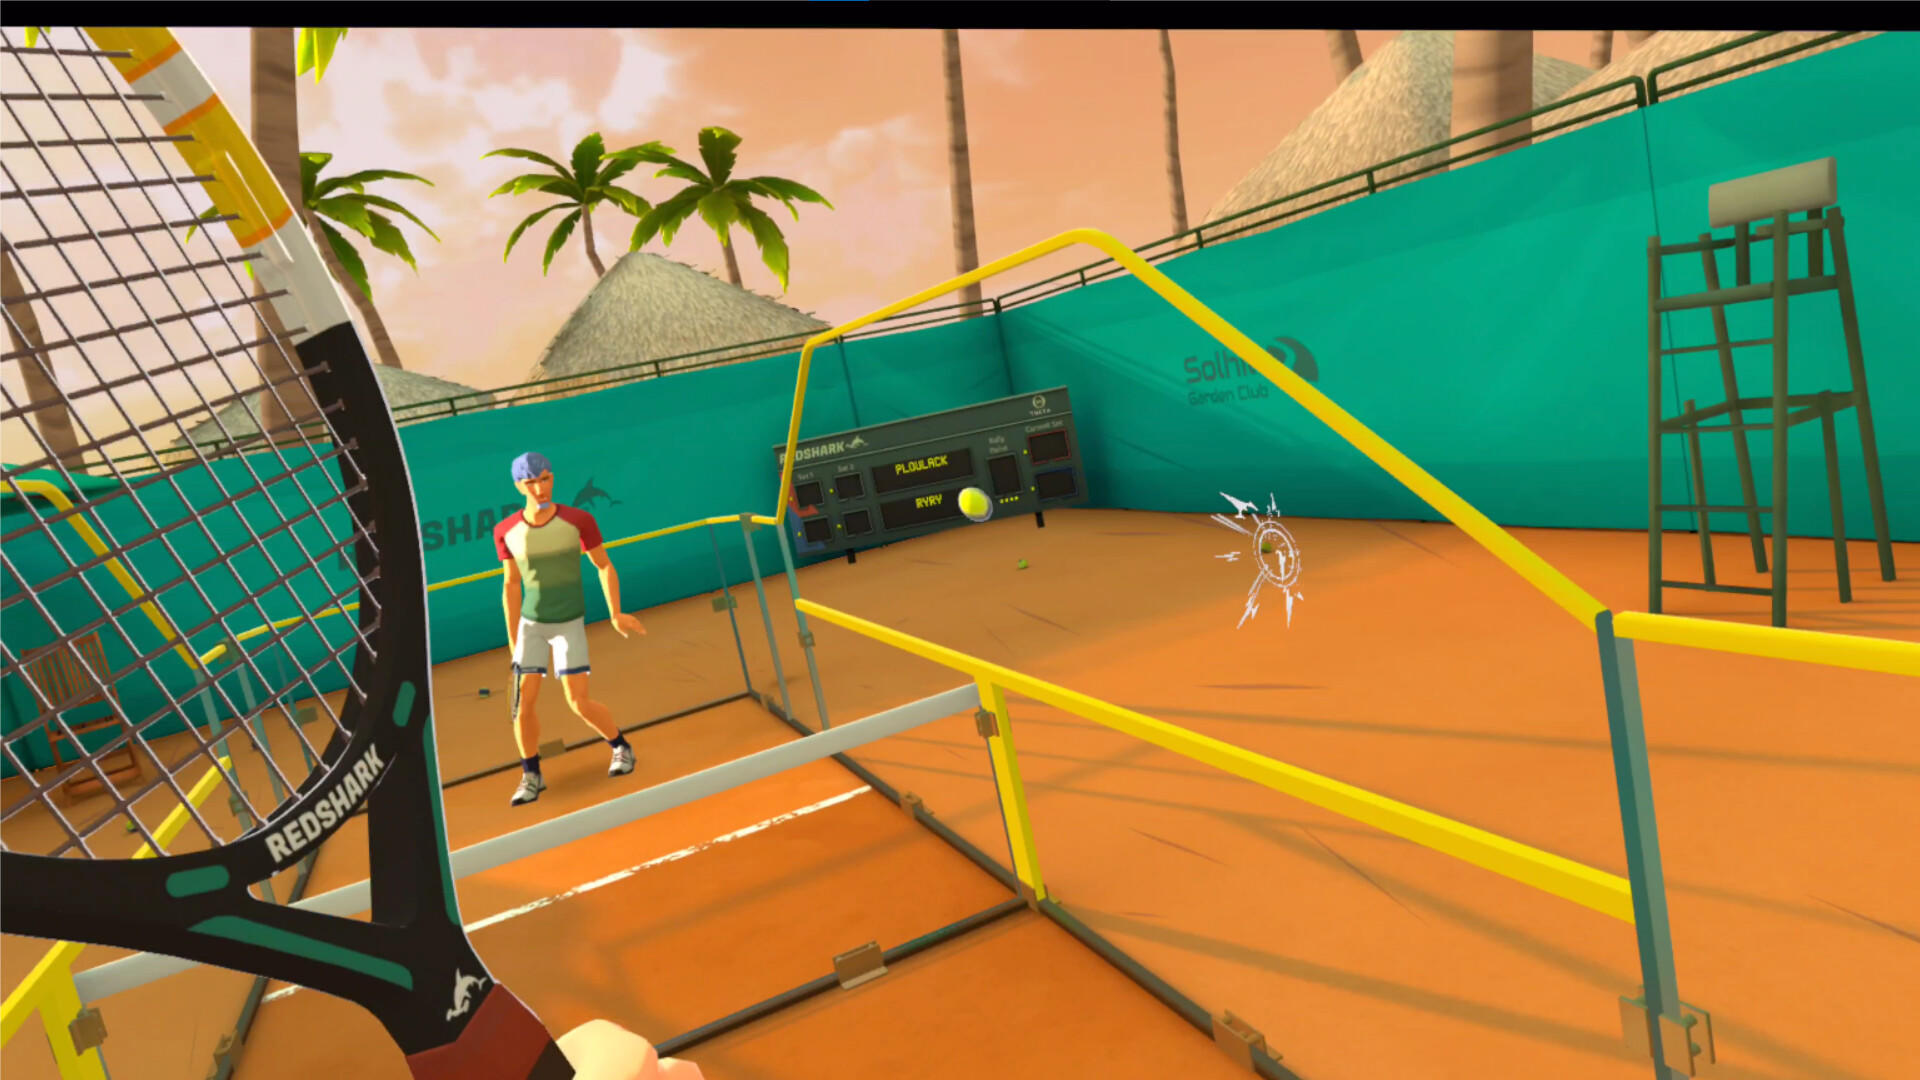 Screenshot of Racket Club